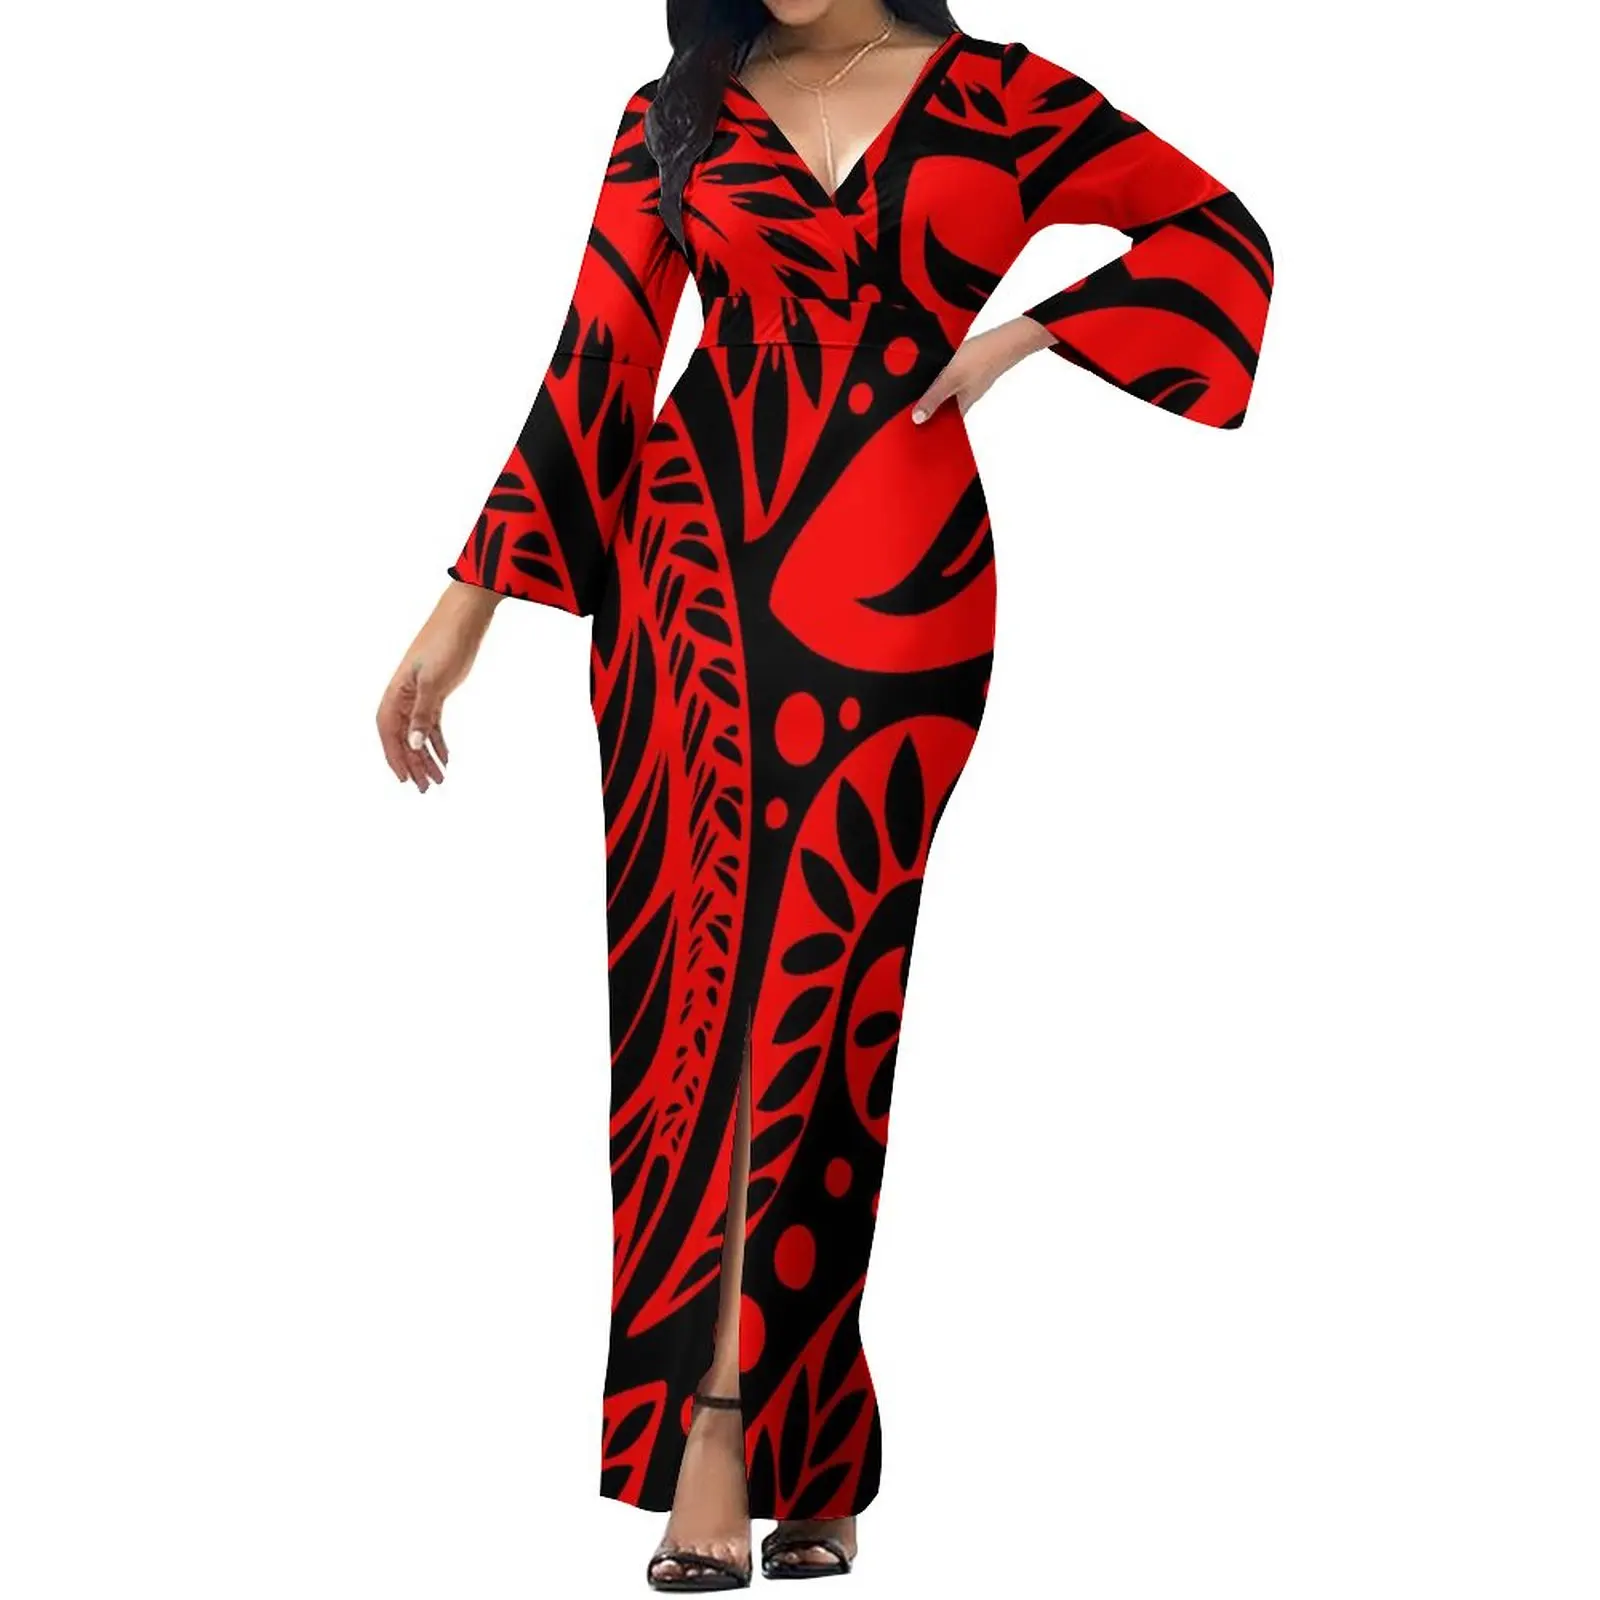 New Party Dress Fashion Art Design Custom Polynesian Tribal Ethnic Style Summer Soft Fabric Casual Floor Length Dress